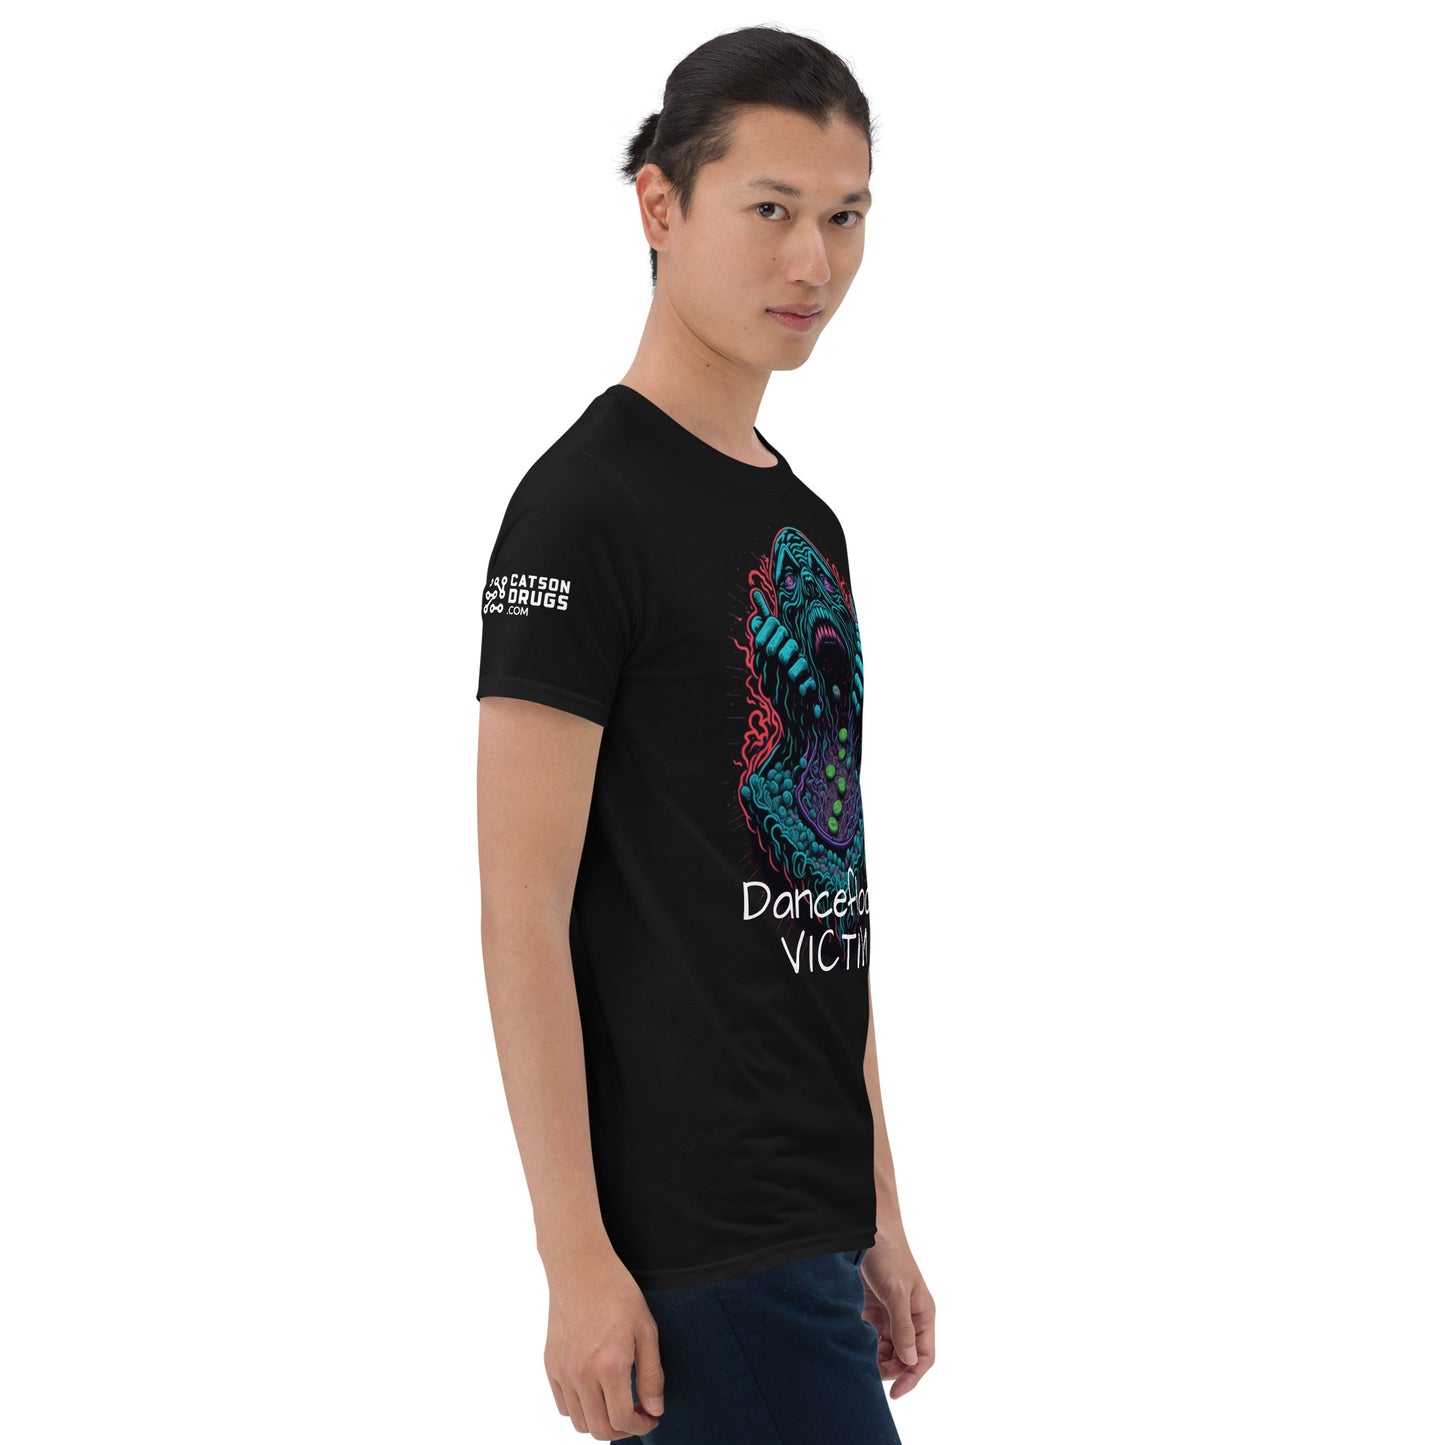 Dancefloor Victim - Unisex T-Shirt, Ecstasy Edition